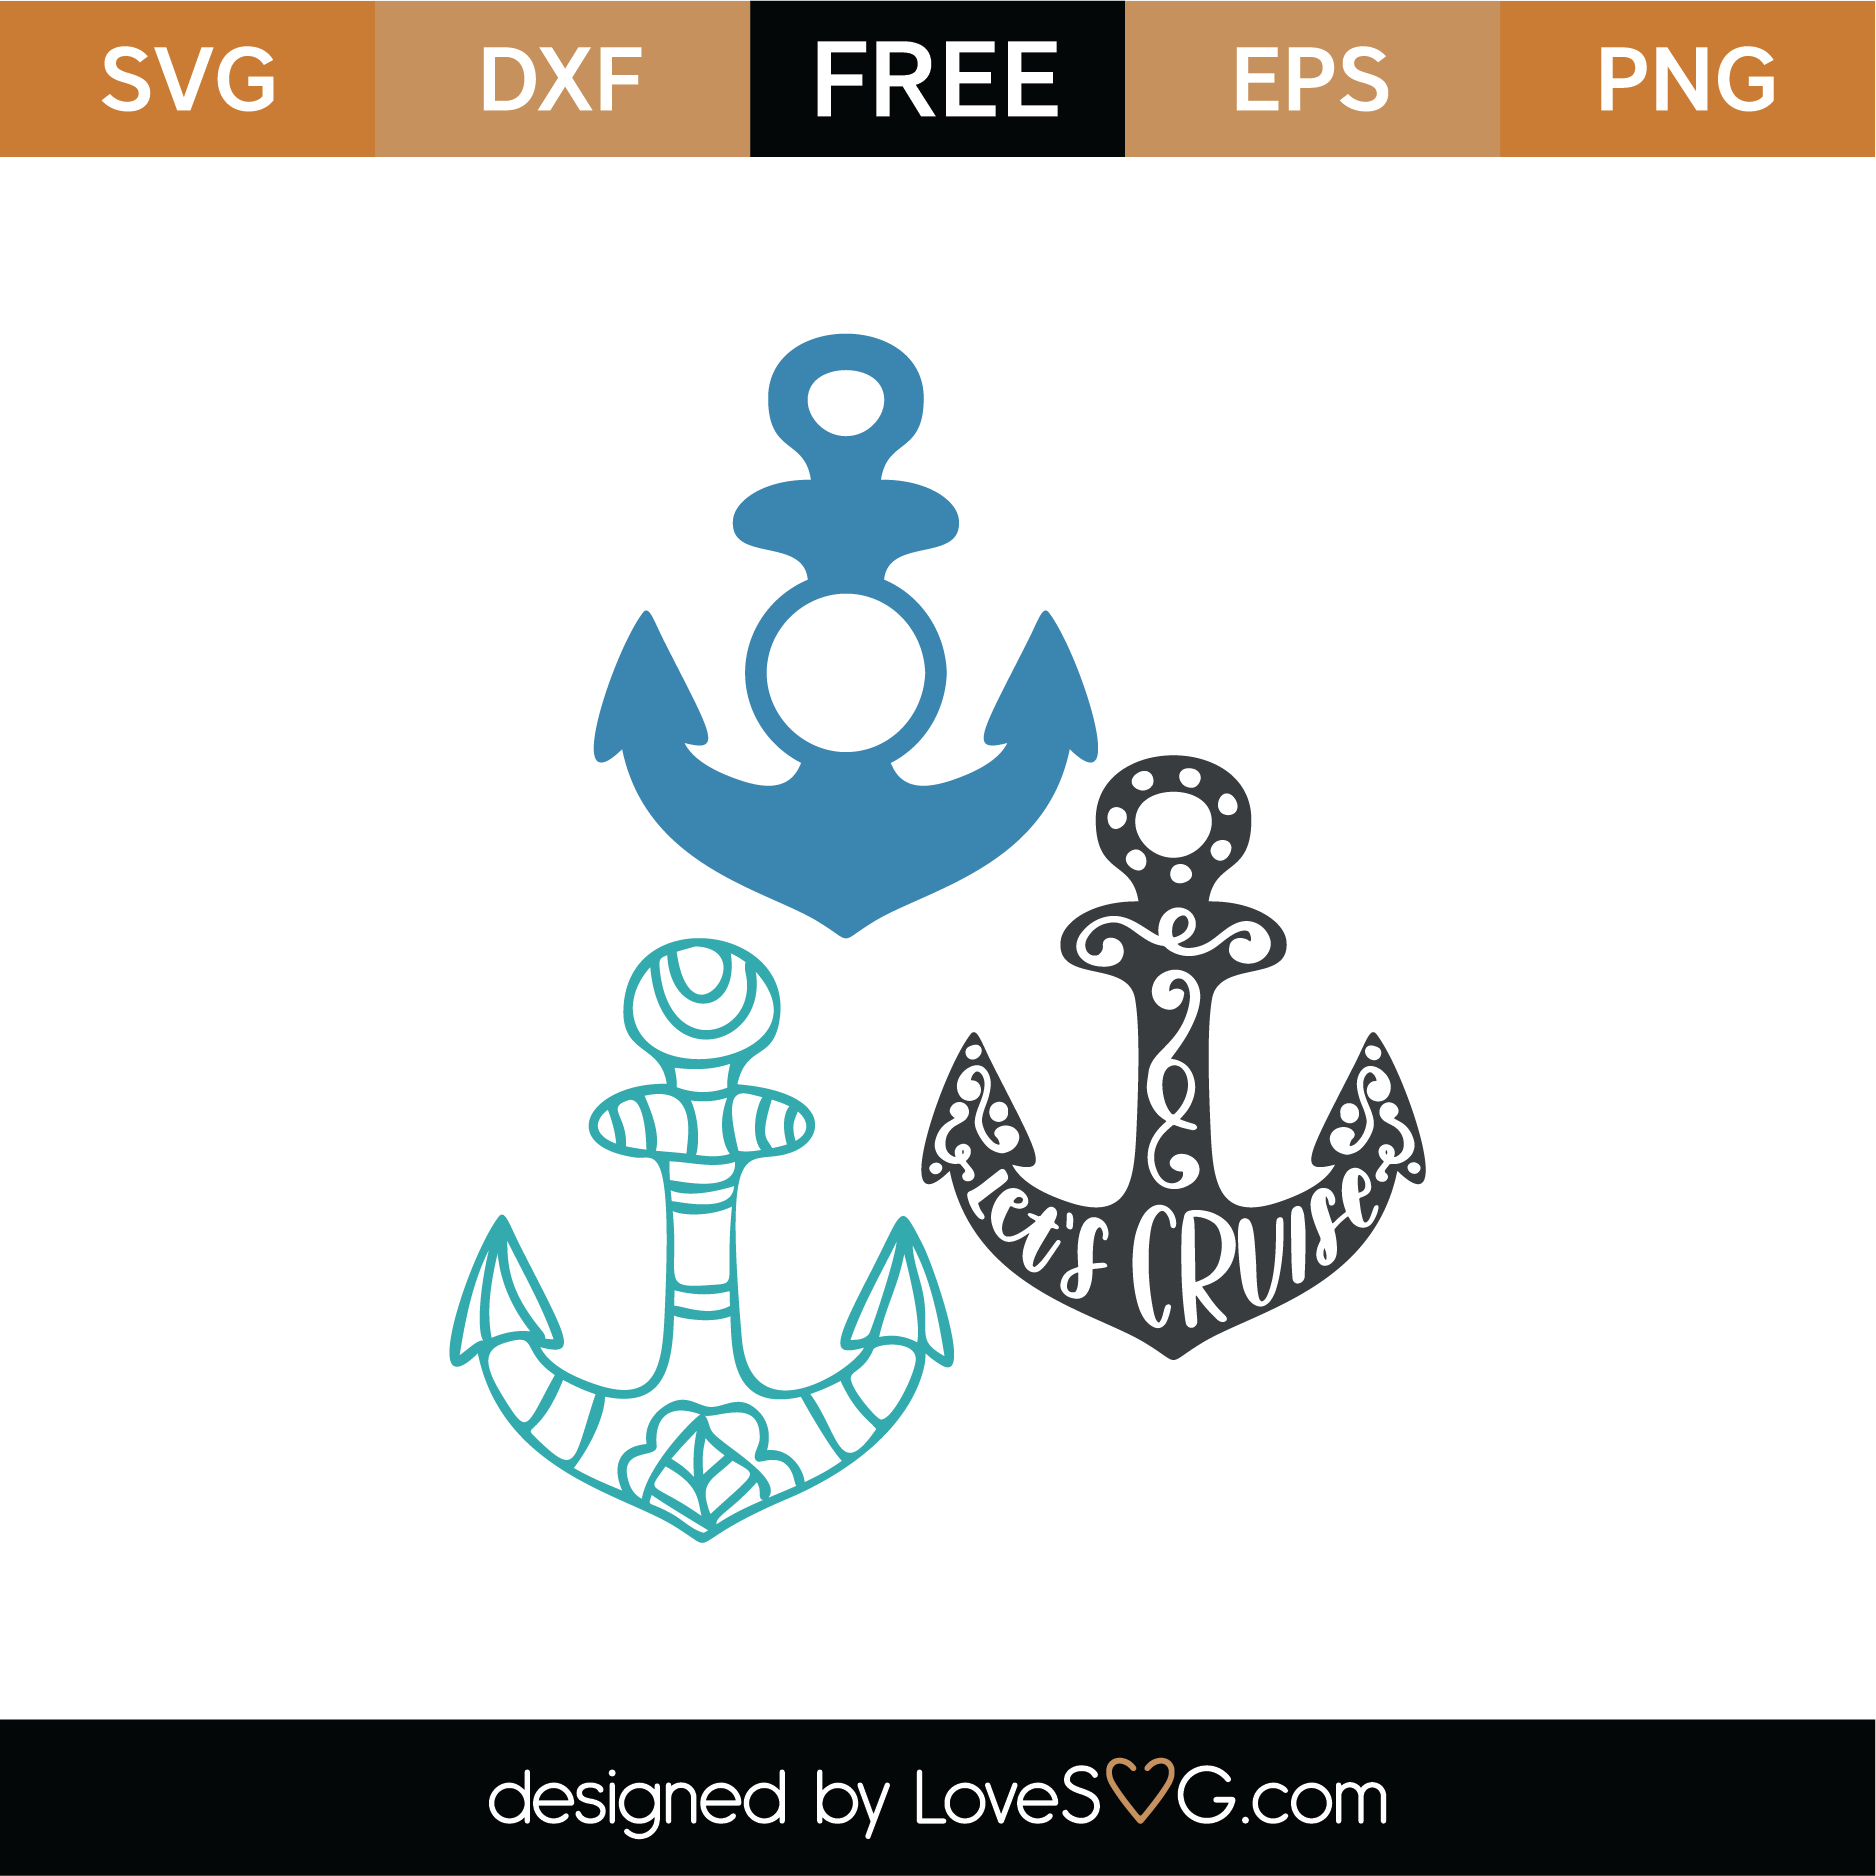 Download Free Anchors SVG Cut File | Lovesvg.com